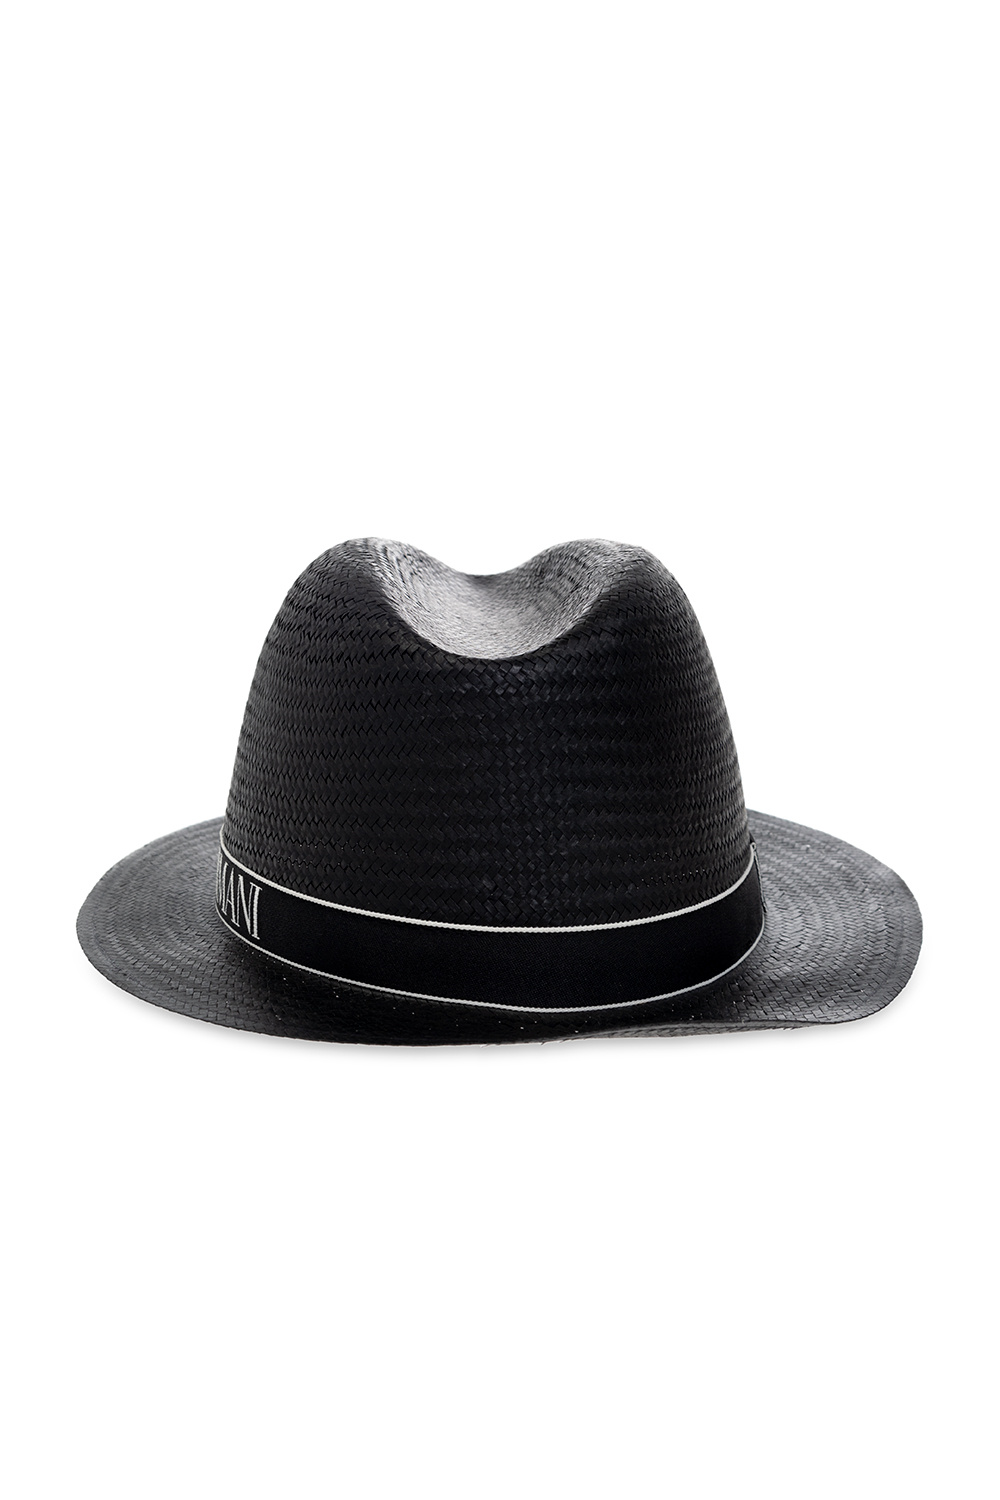 Emporio Armani POLO hat with logo